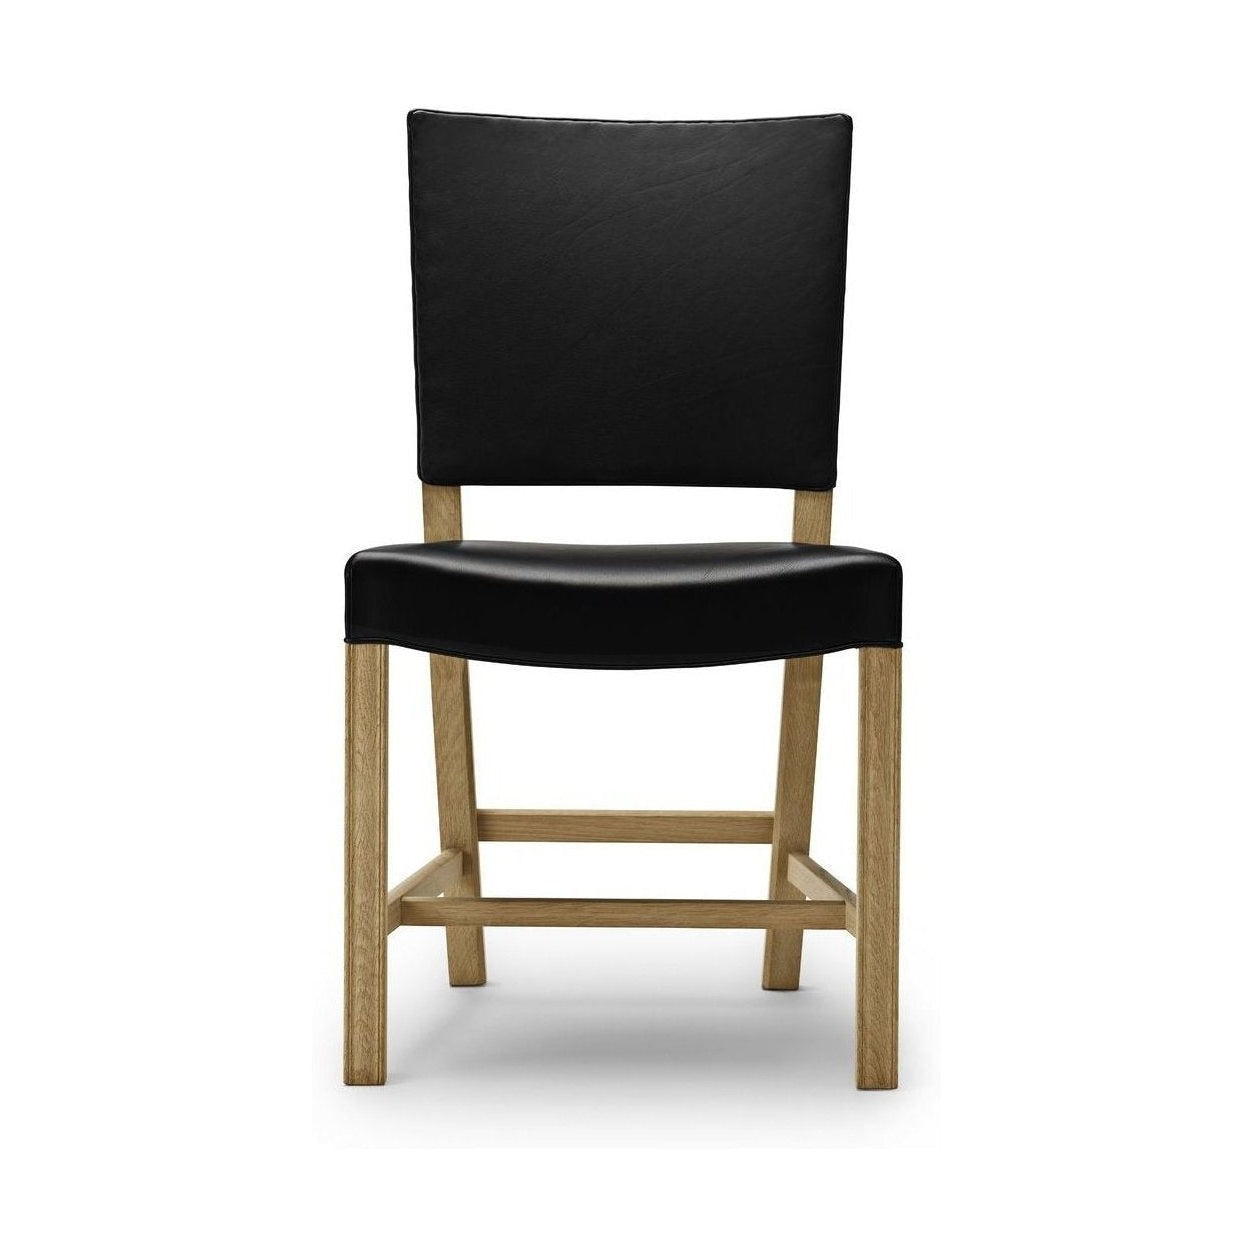 Carl Hansen KK37580 Grote rode stoel, soaped eik/zwart leer